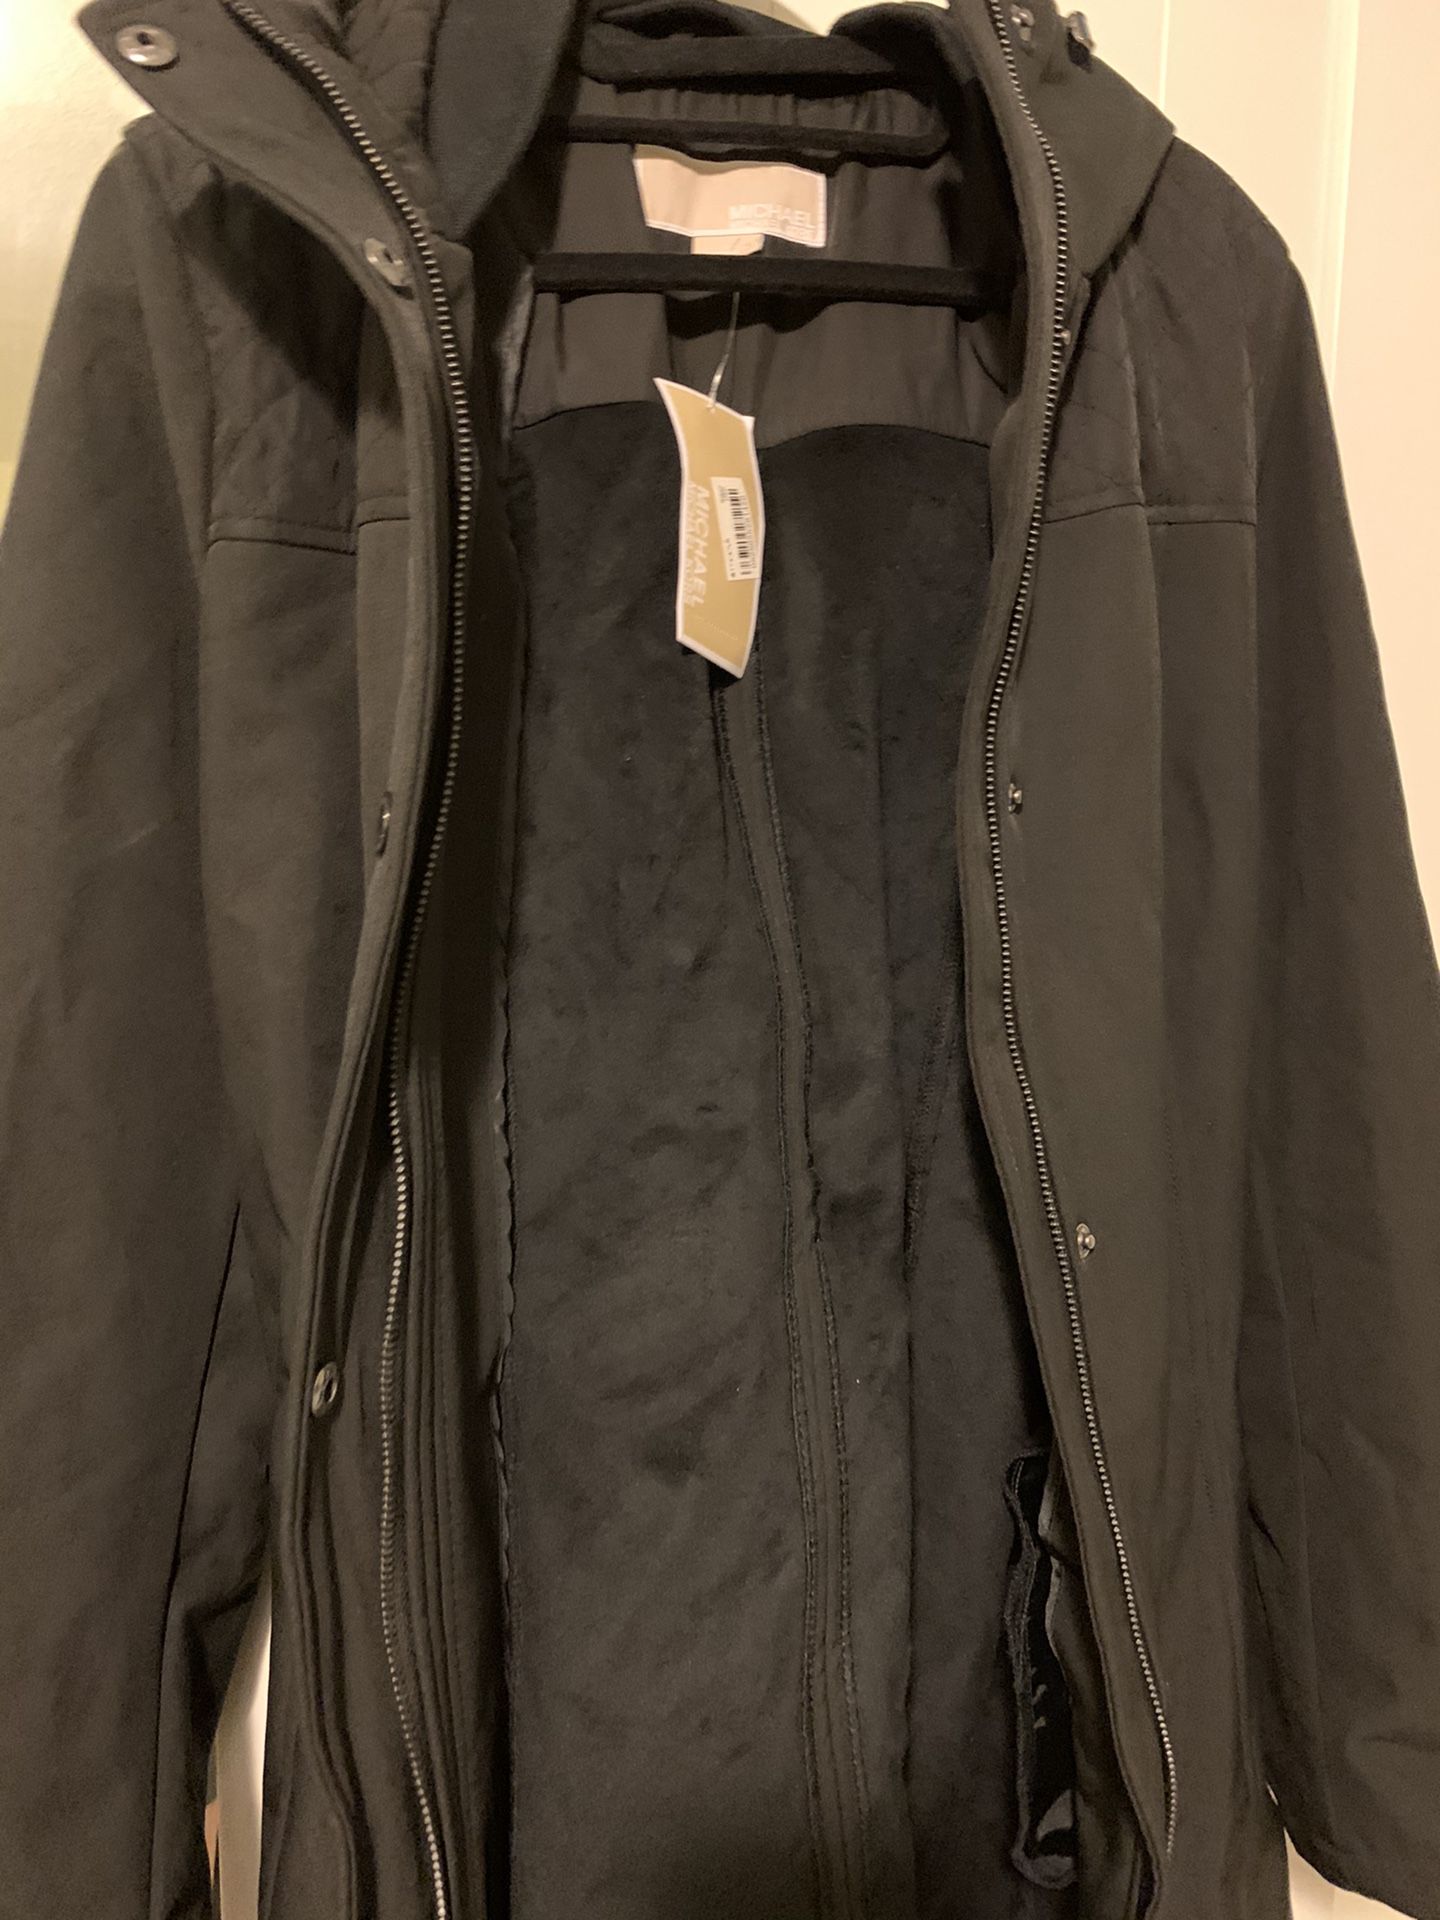 Michael kors jacket for women new size Large